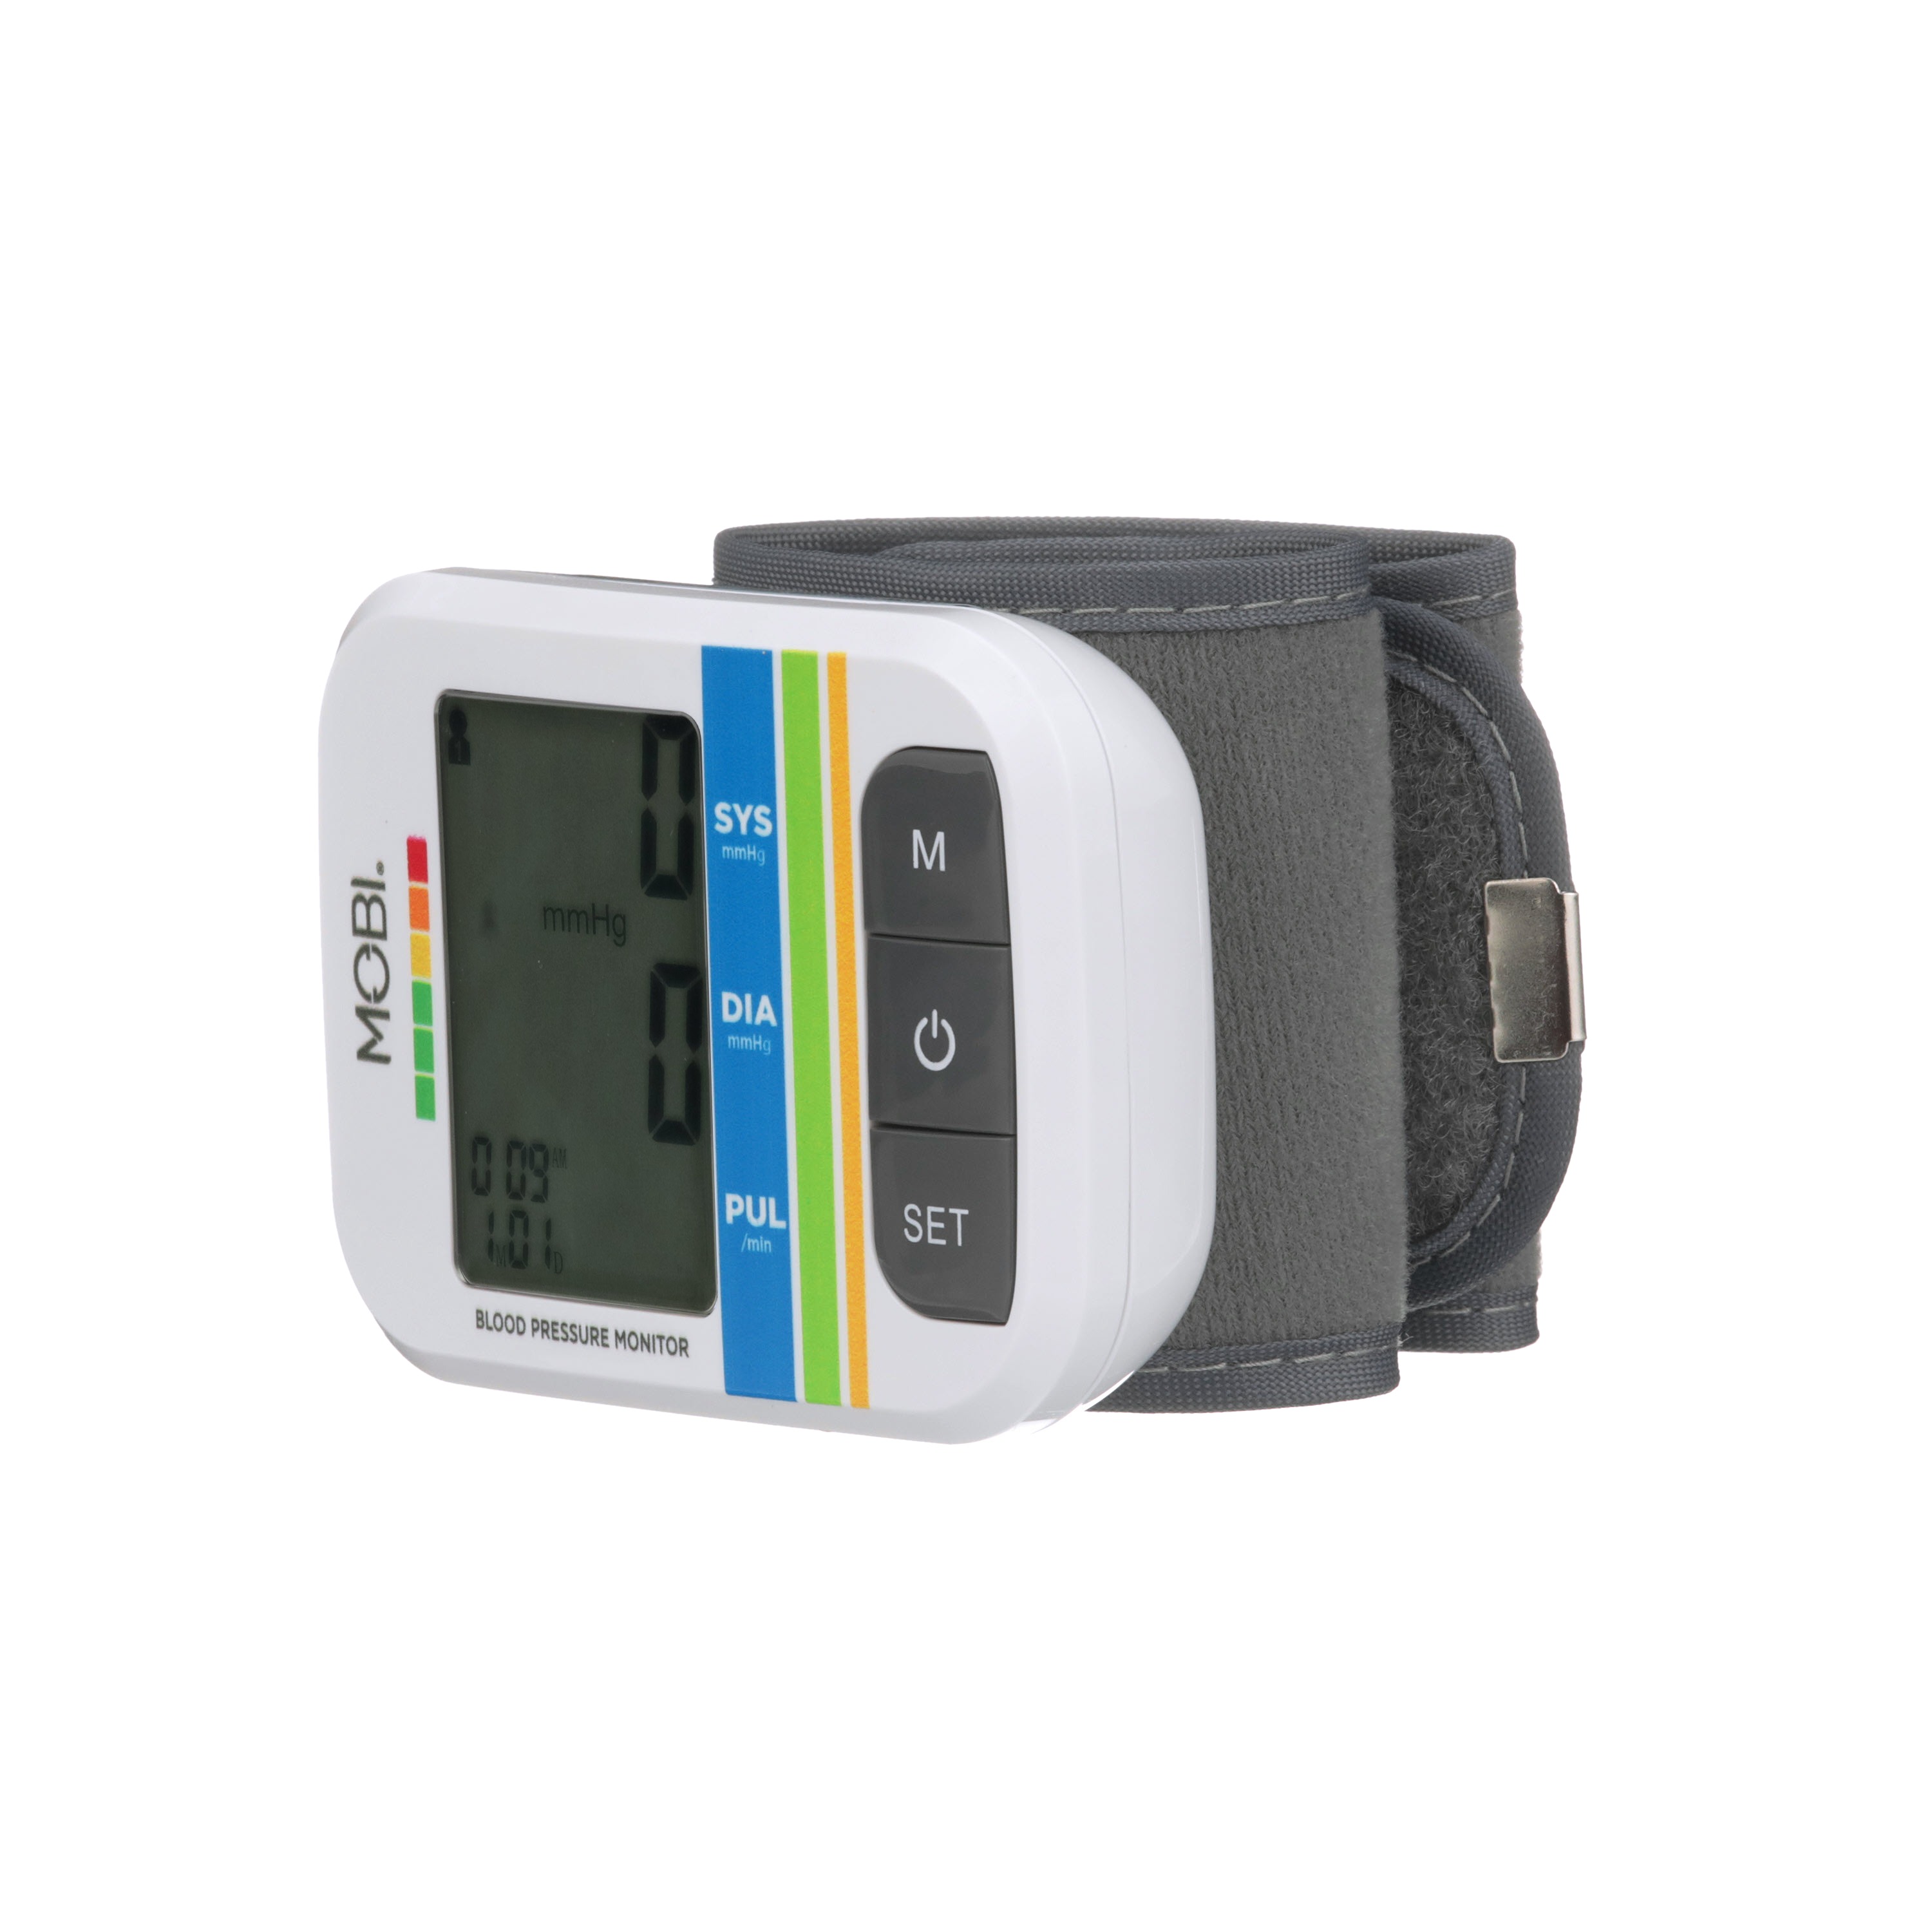 Mobi Wrist Blood Pressure Monitor